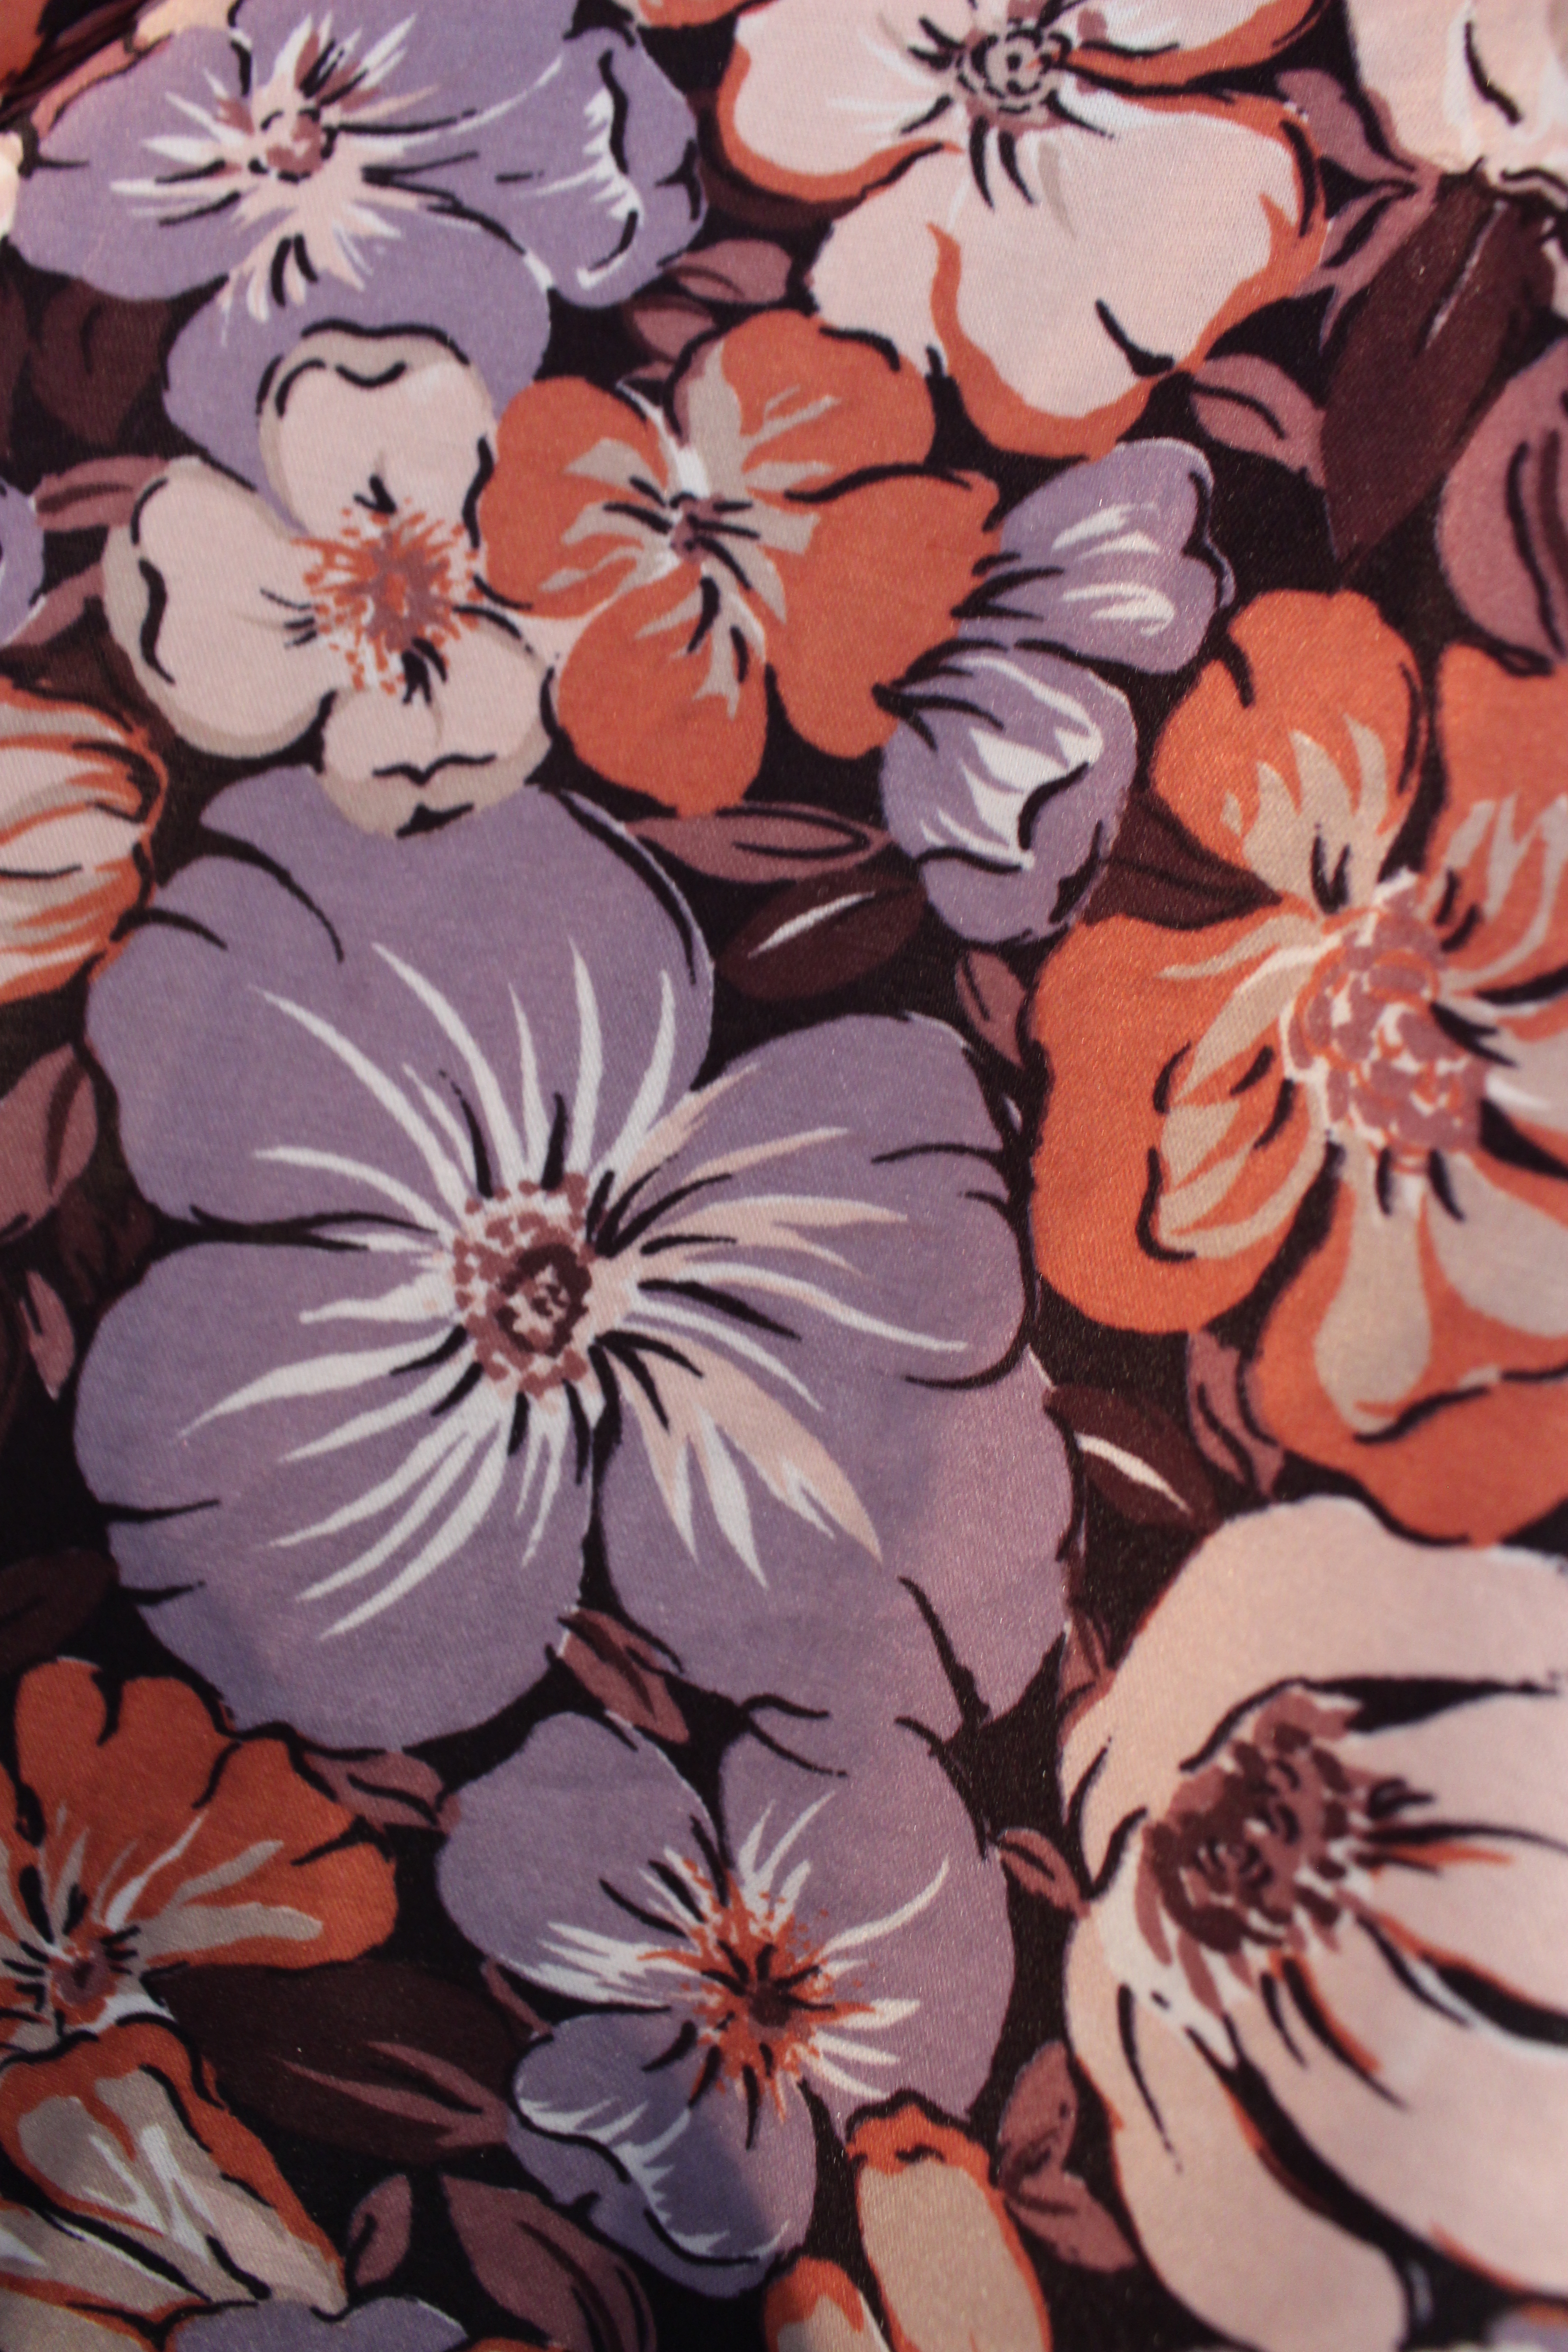 Flower-printed kimono top